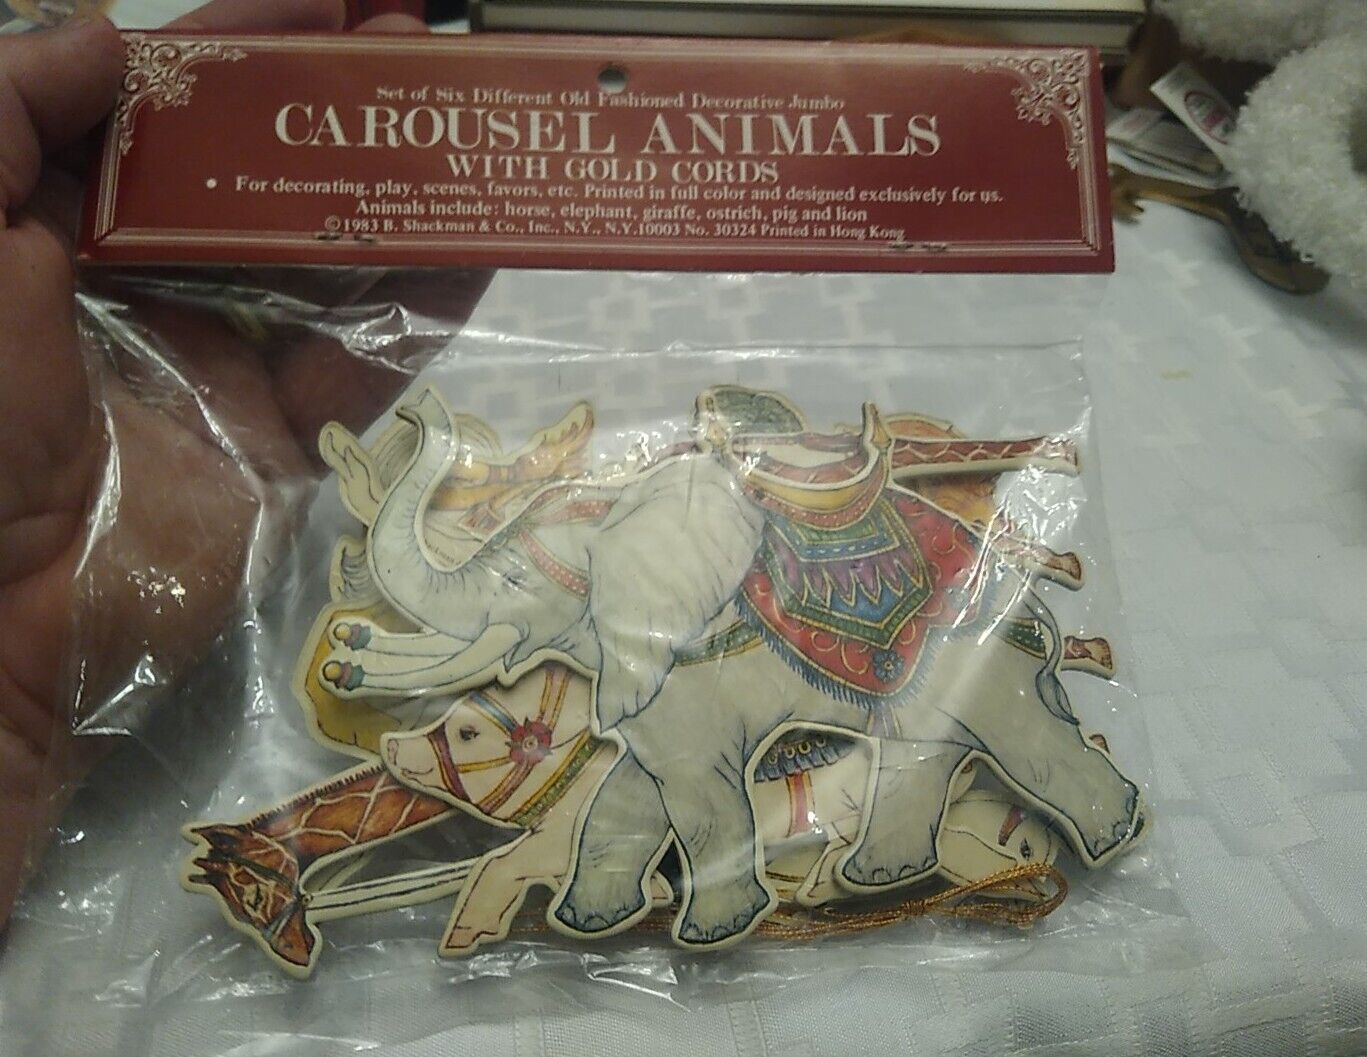 Merrimack Publ. VTG 1983 Die Cut Cardboard Carousel Animals w Gold Cords New